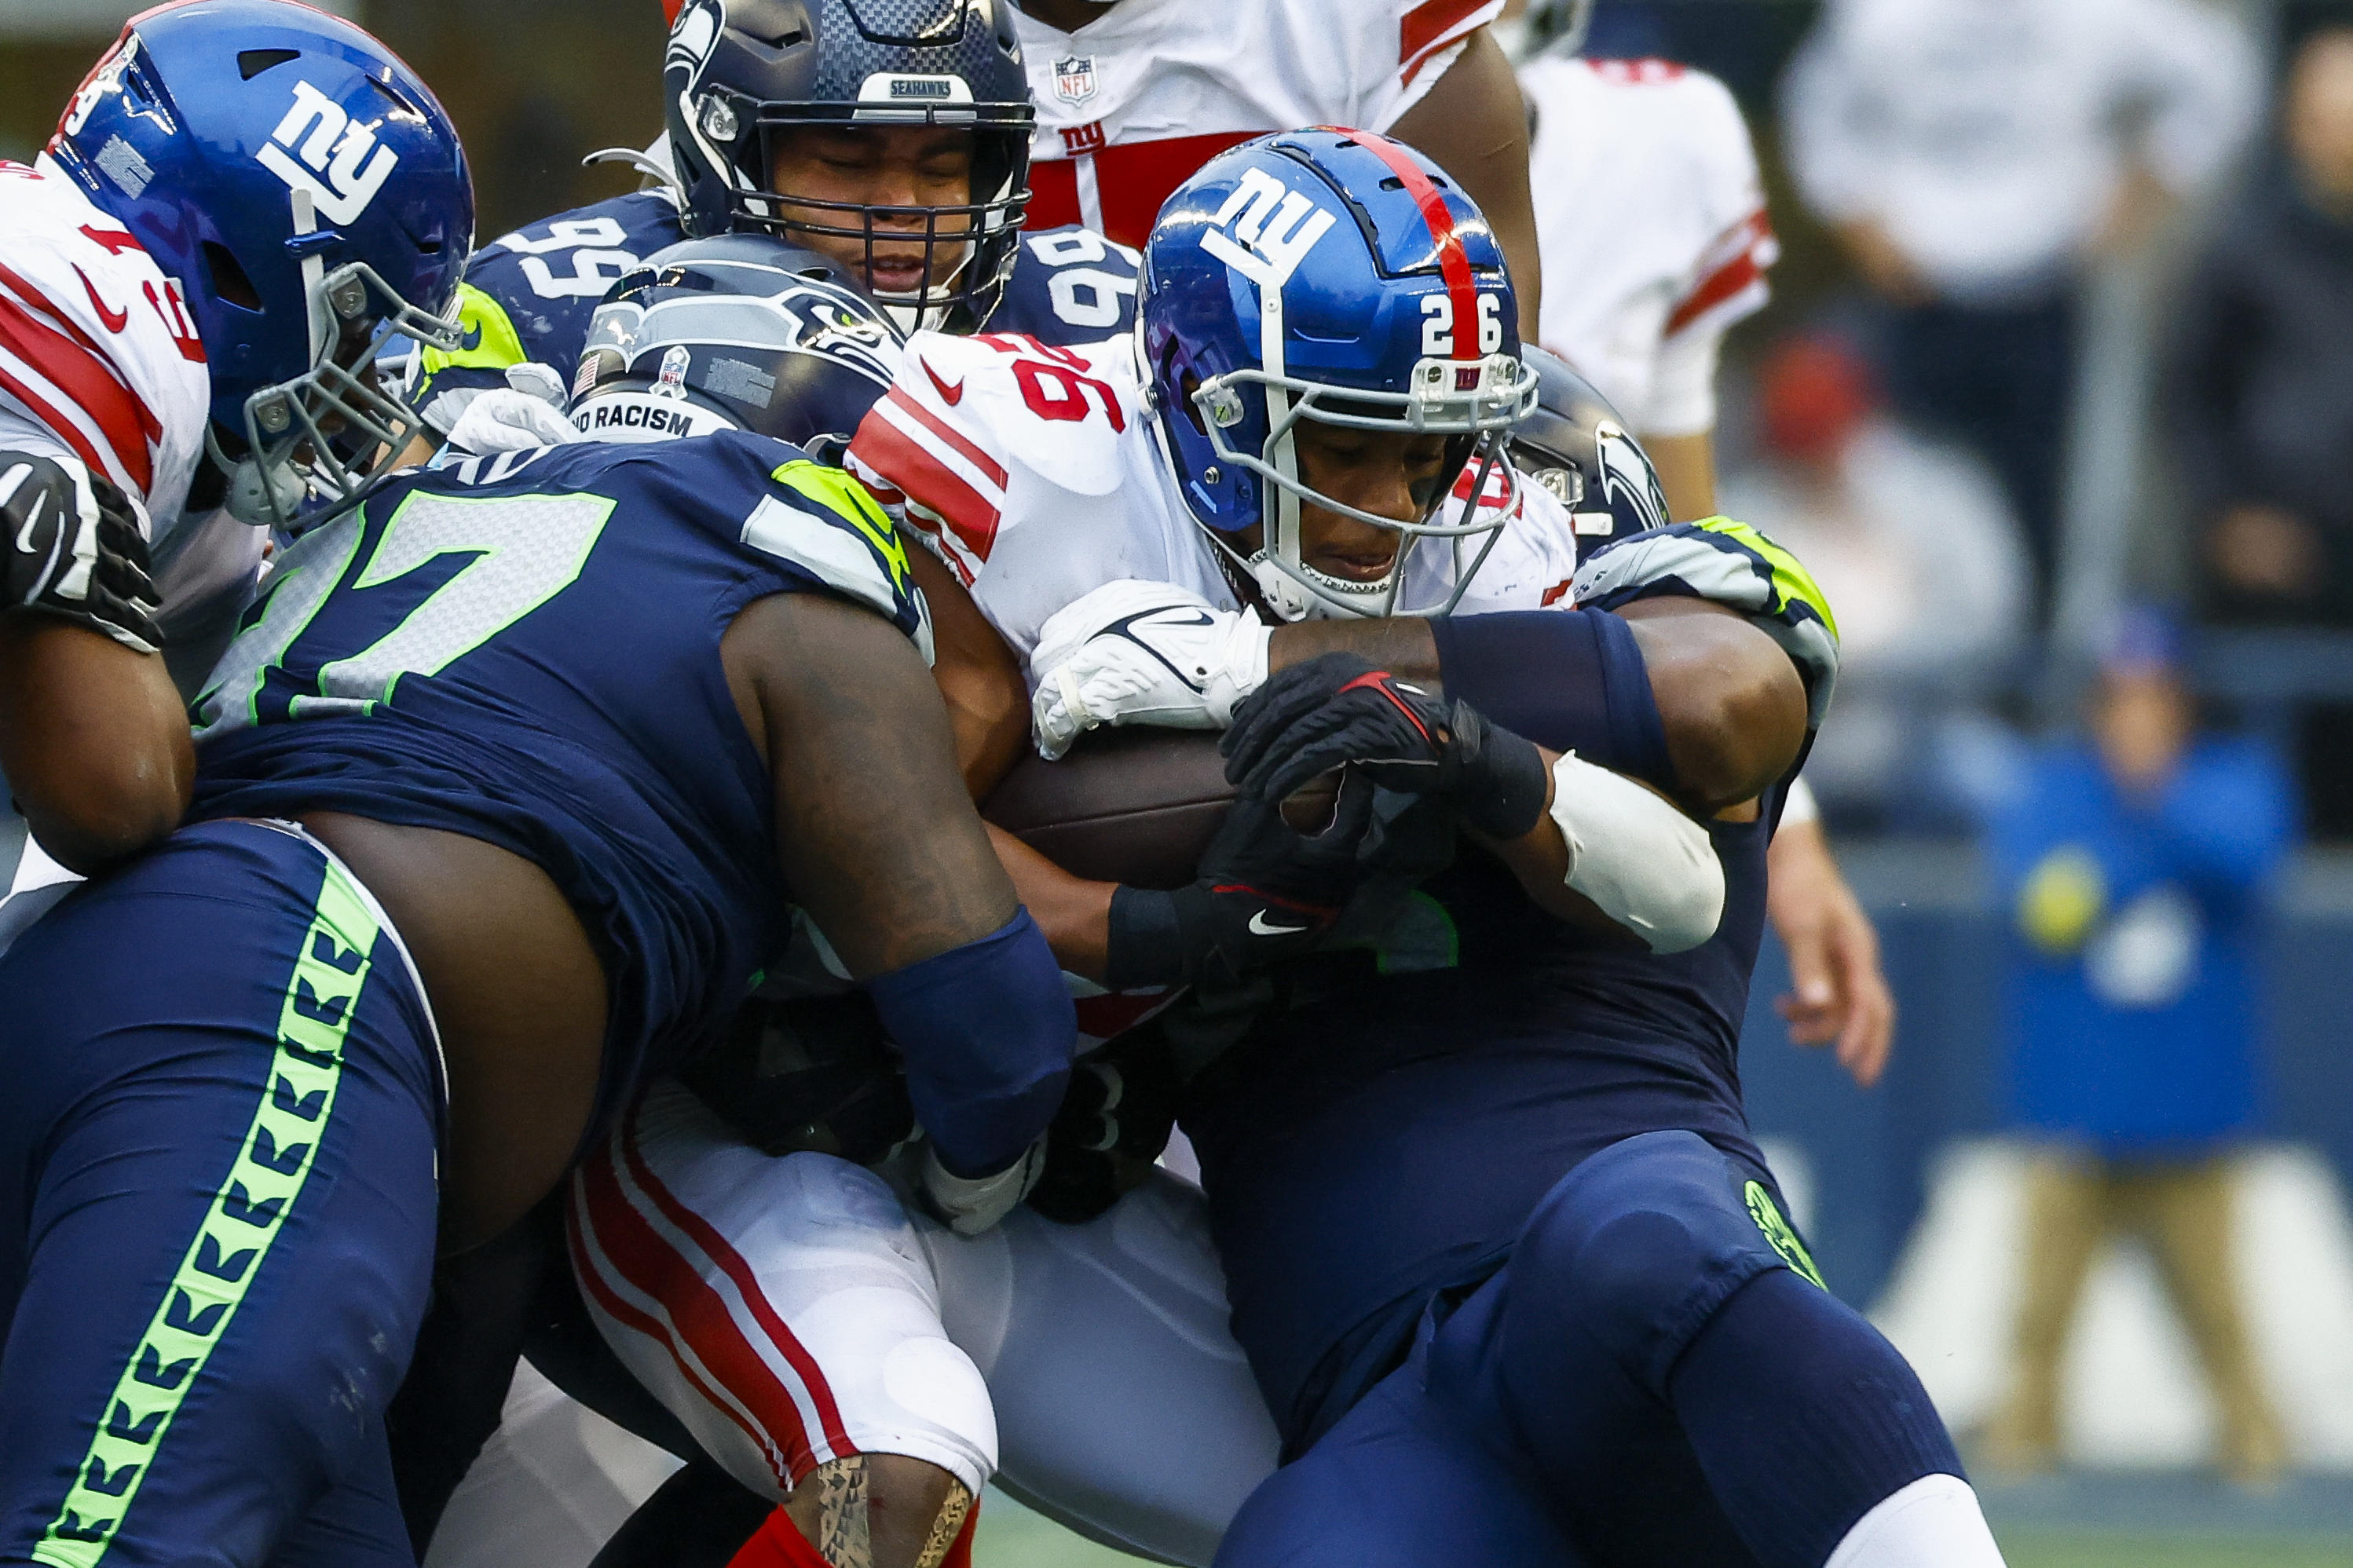 NY Giants look like playoff contenders as defense slams Seahawks 17-12